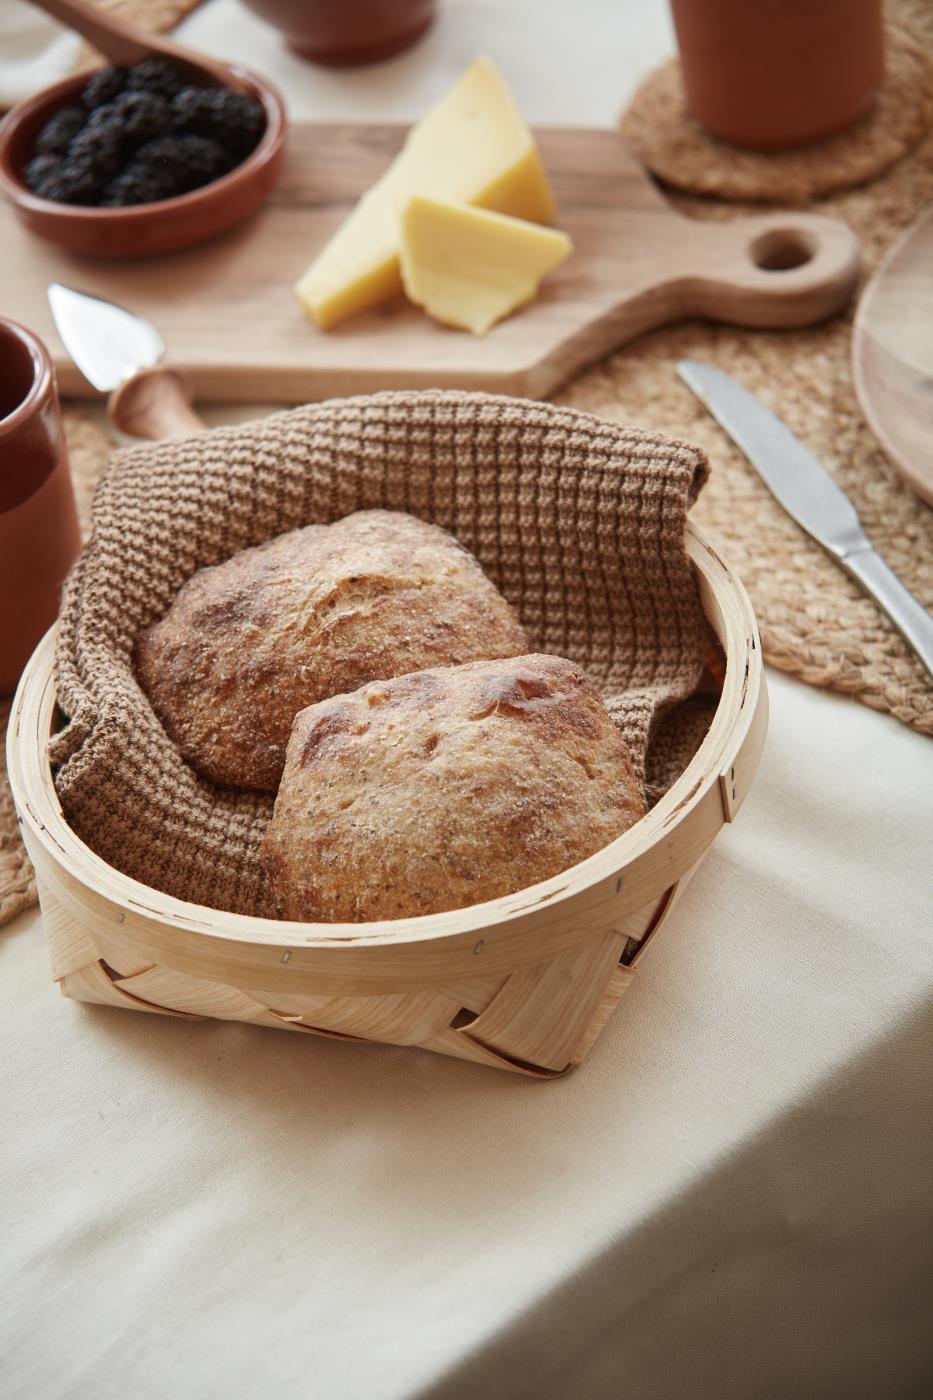 Chip Wood Breadbasket